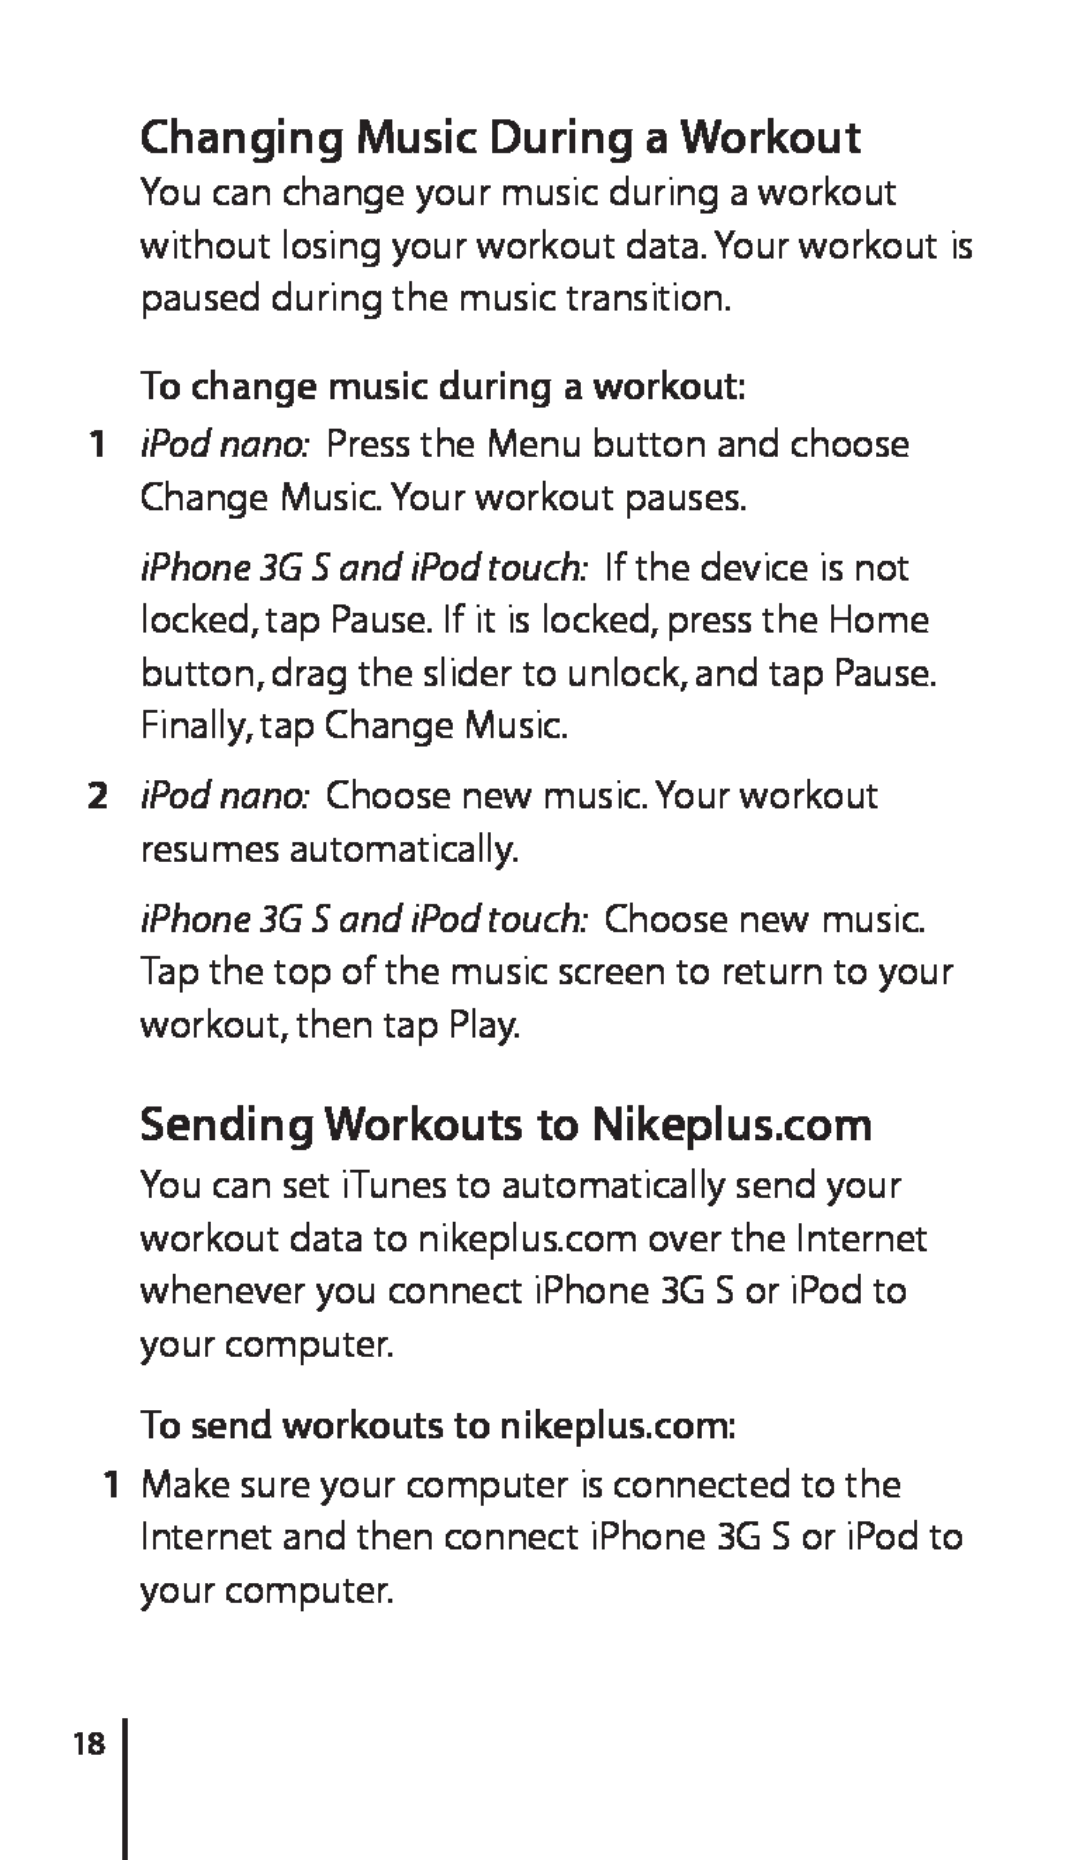 Apple Nike + iPod Sensor, 034-4945-A manual Changing Music During a Workout, Sending Workouts to Nikeplus.com 